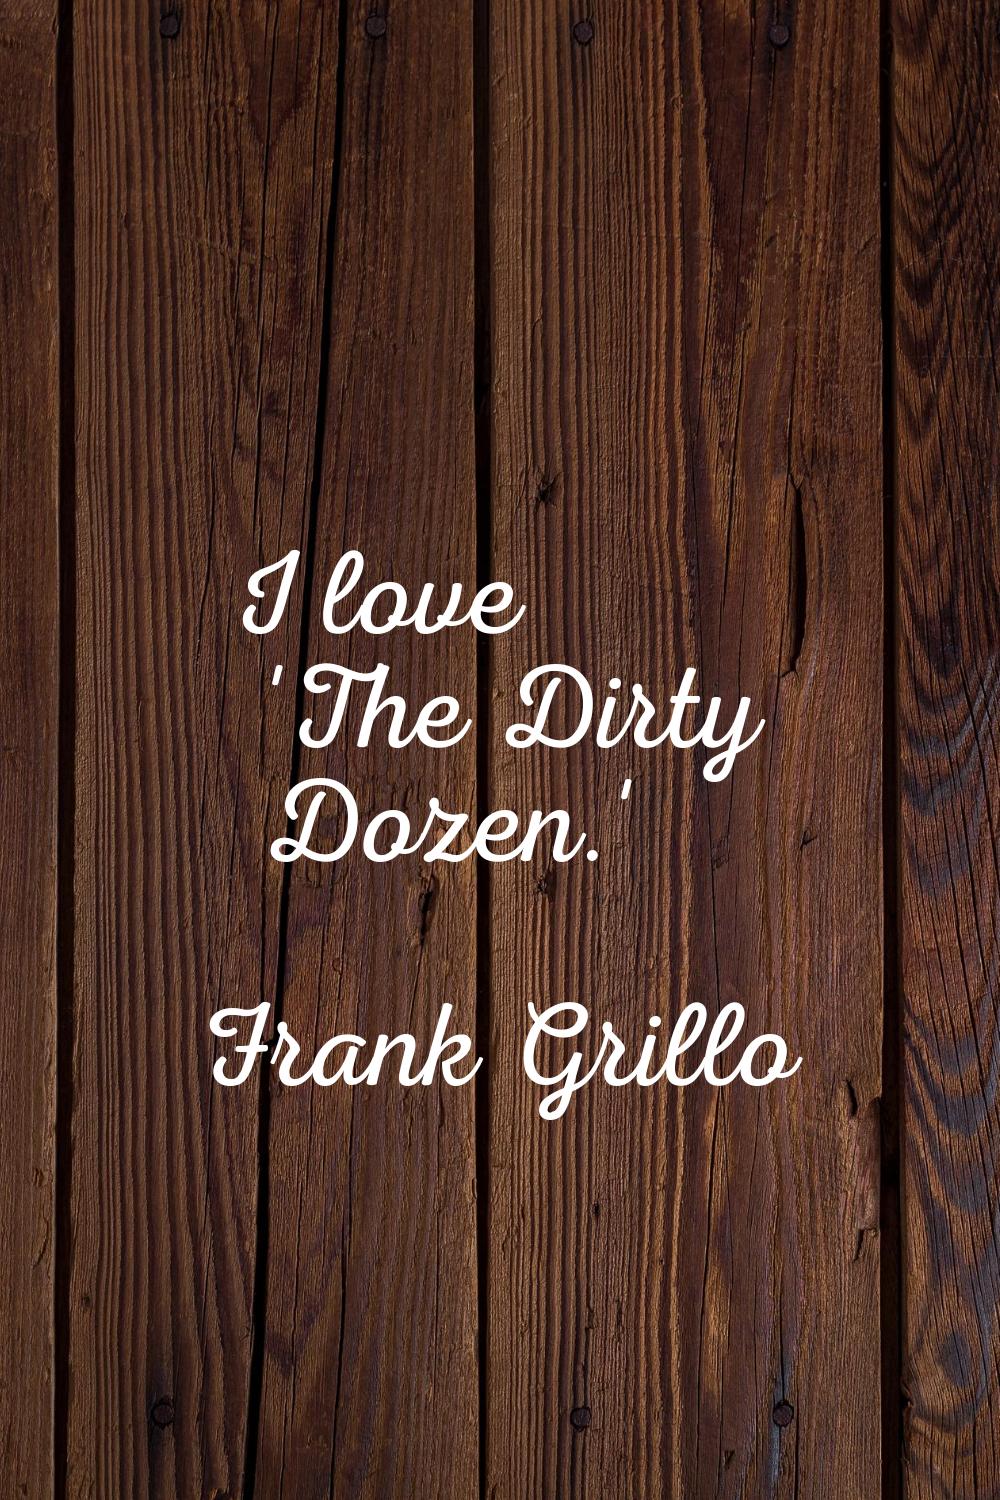 I love 'The Dirty Dozen.'